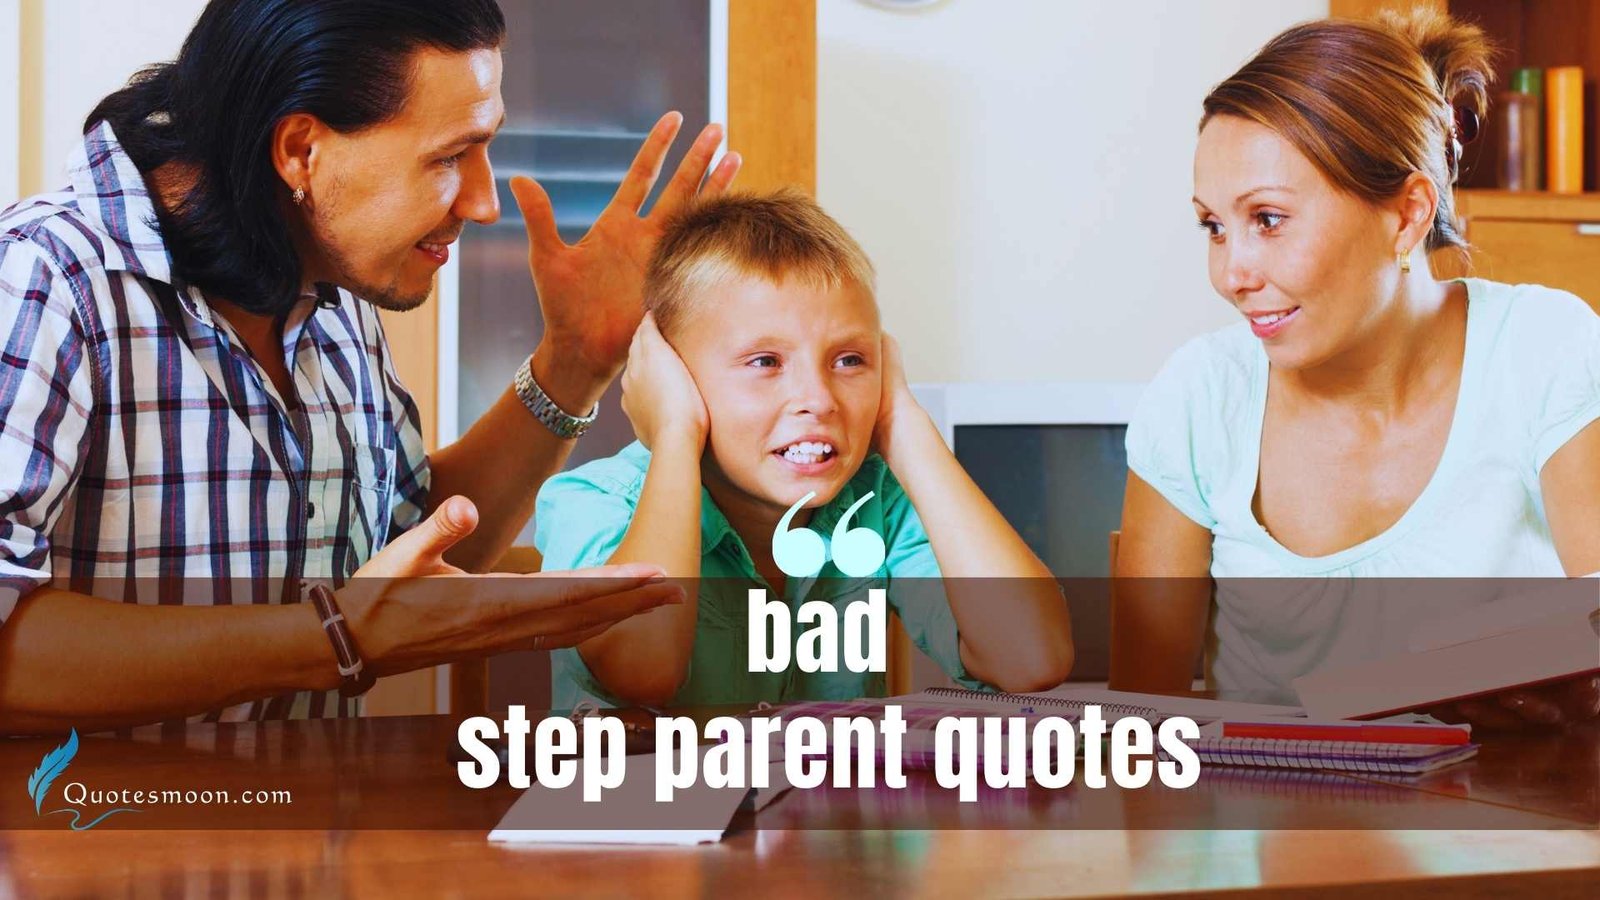 bad step parent quotes images